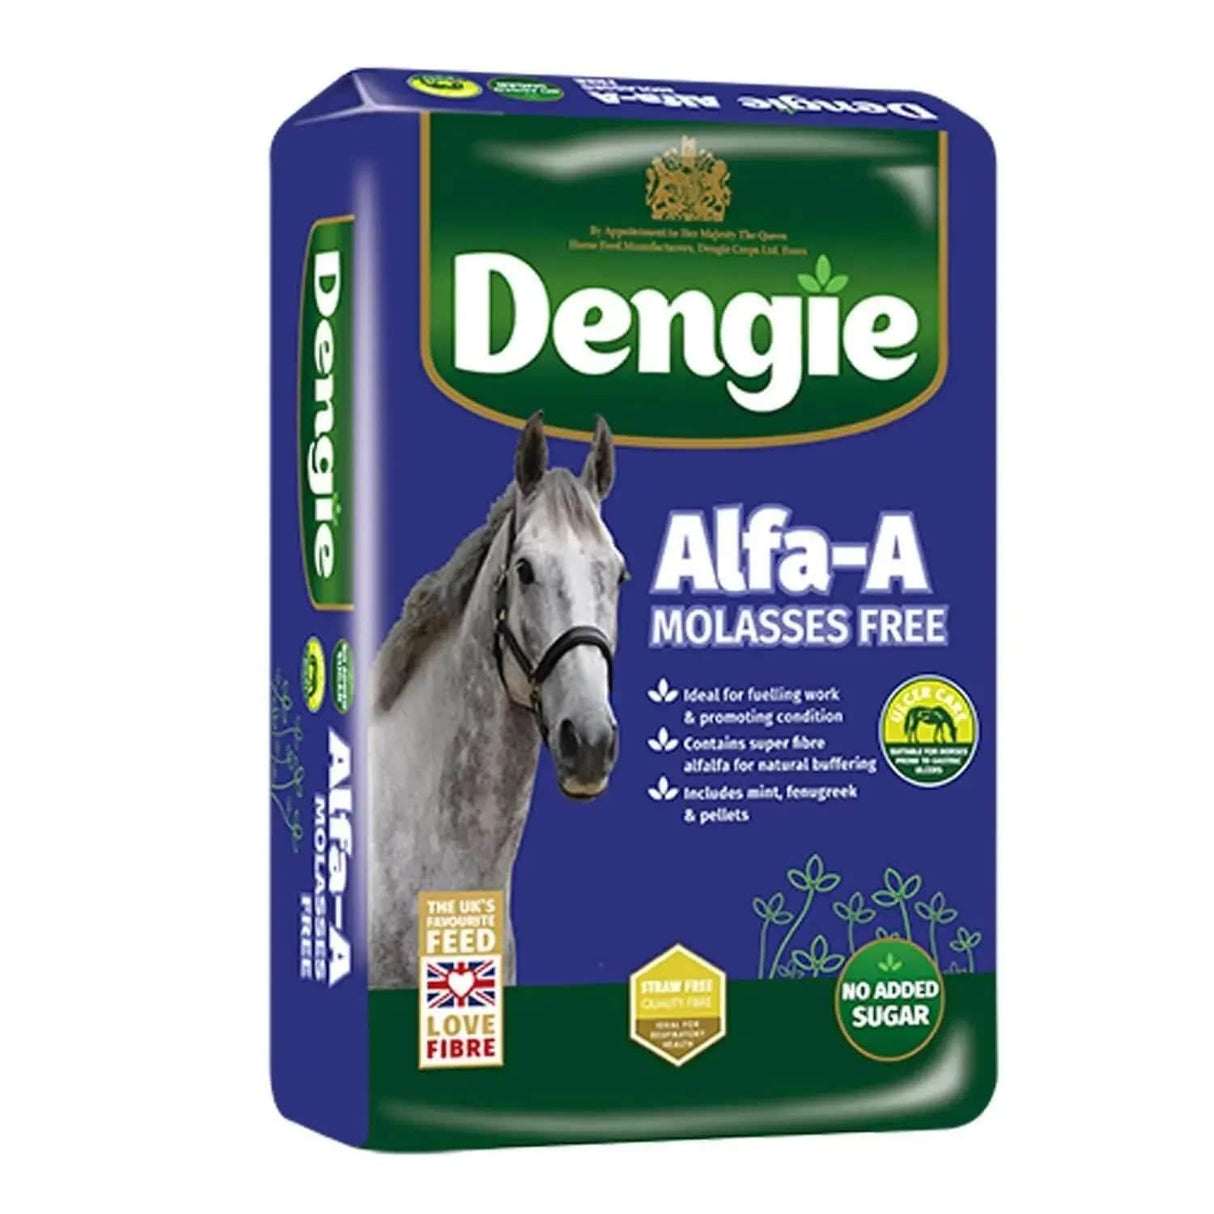 Dengie Alfa A Molasses Free Dengie Horse Feeds Barnstaple Equestrian Supplies